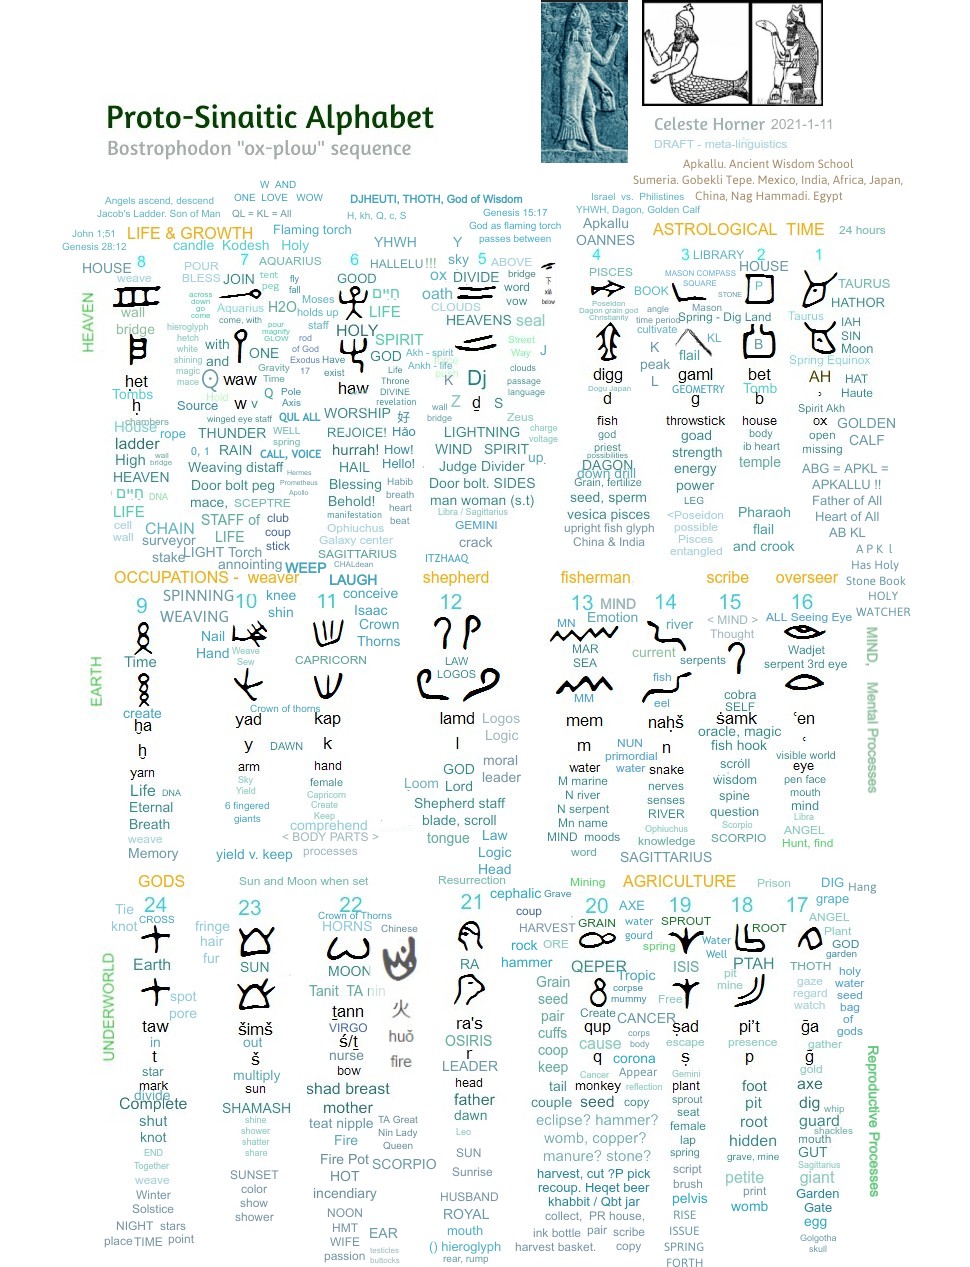 Proto-Sinaitic alphabet, interpreted and arranged in bostrophodon format  by Celeste Horner, December 31, 2020.